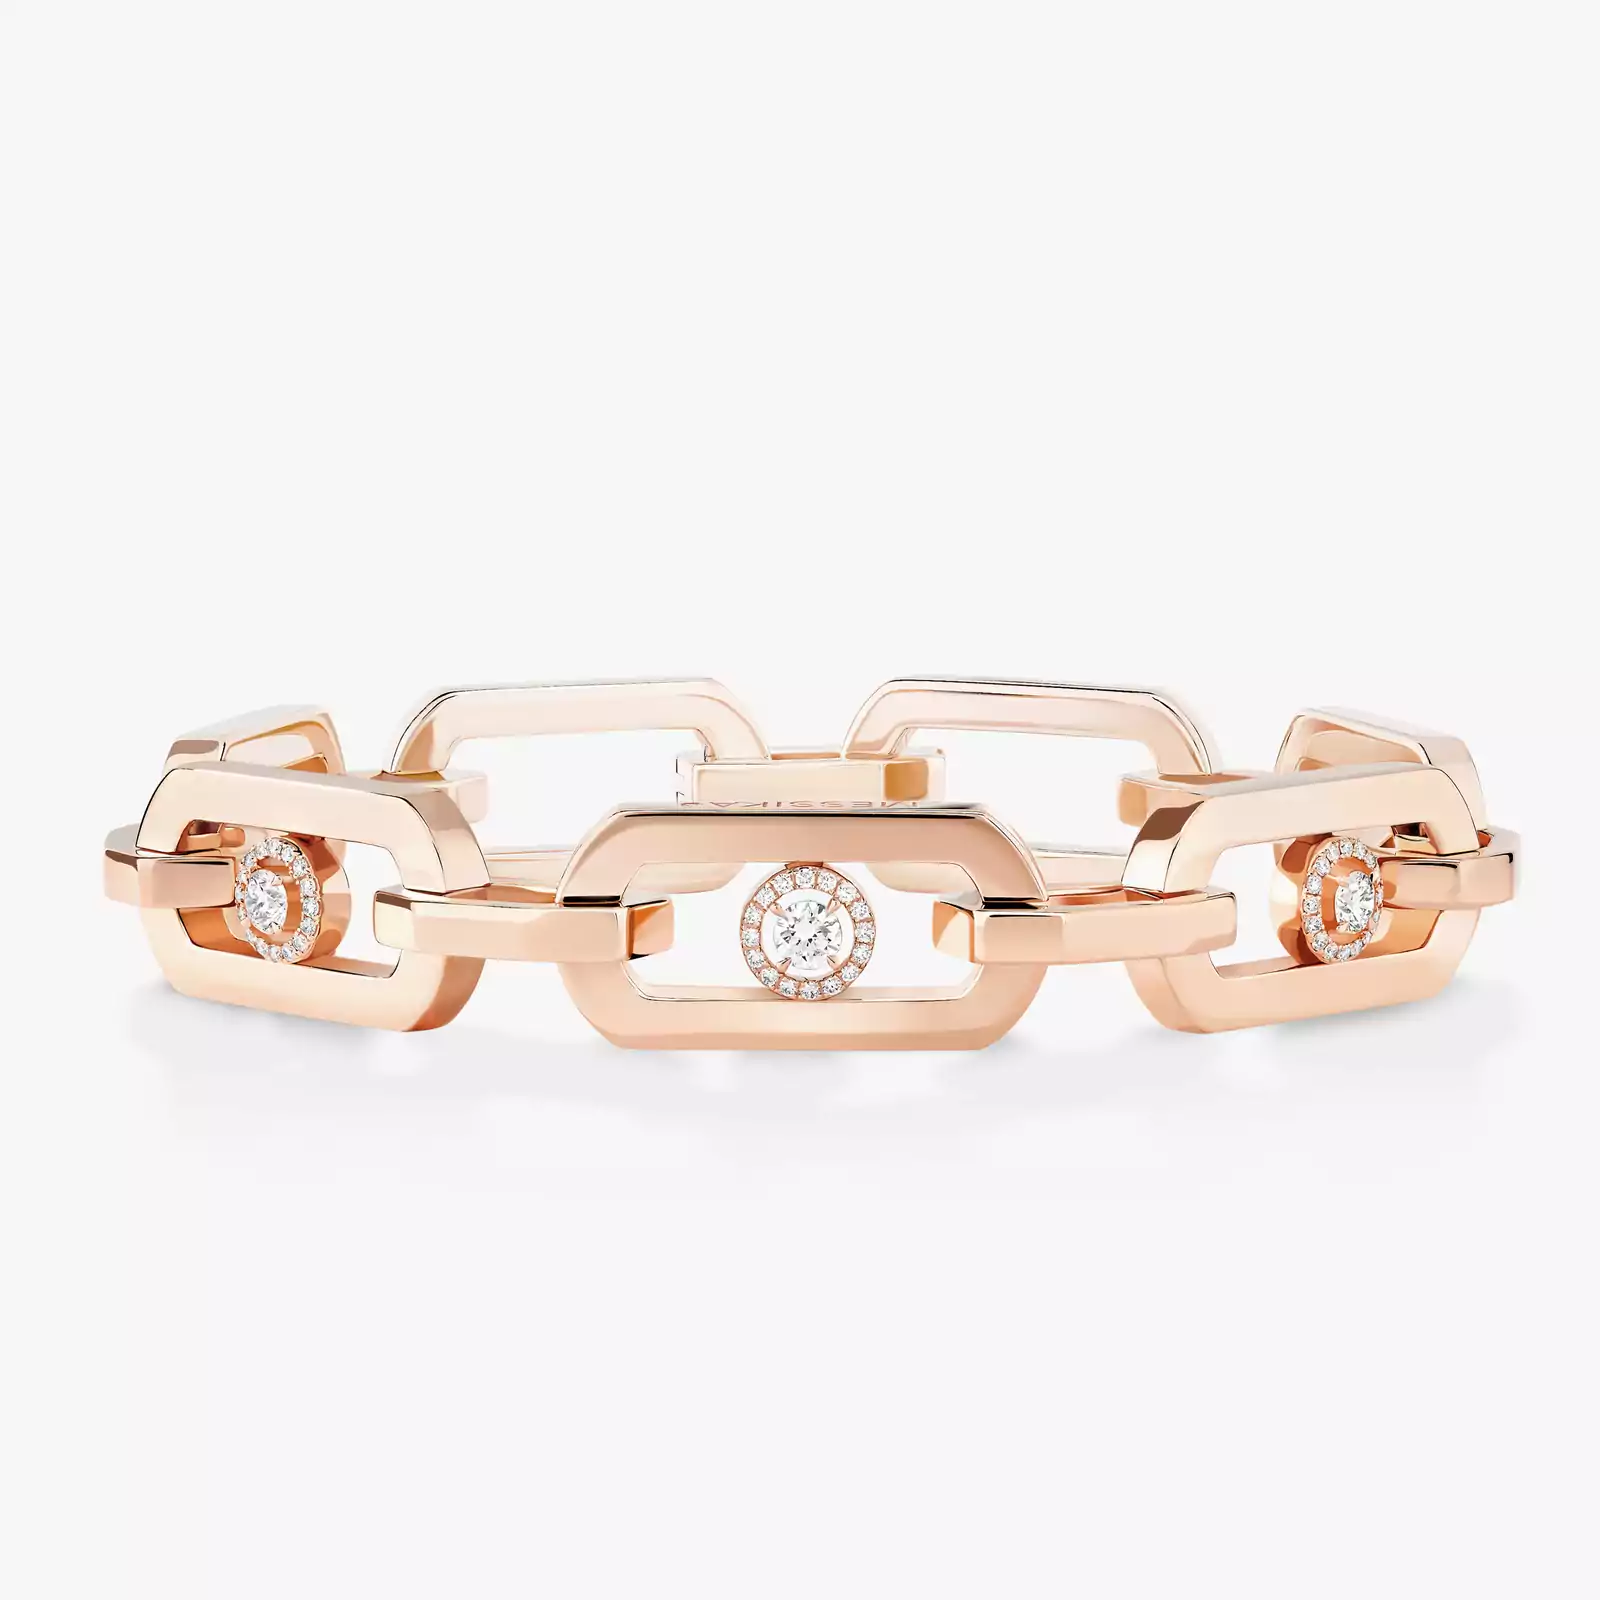 Bracelet Femme Or Rose Diamant So Move XL 13133-PG